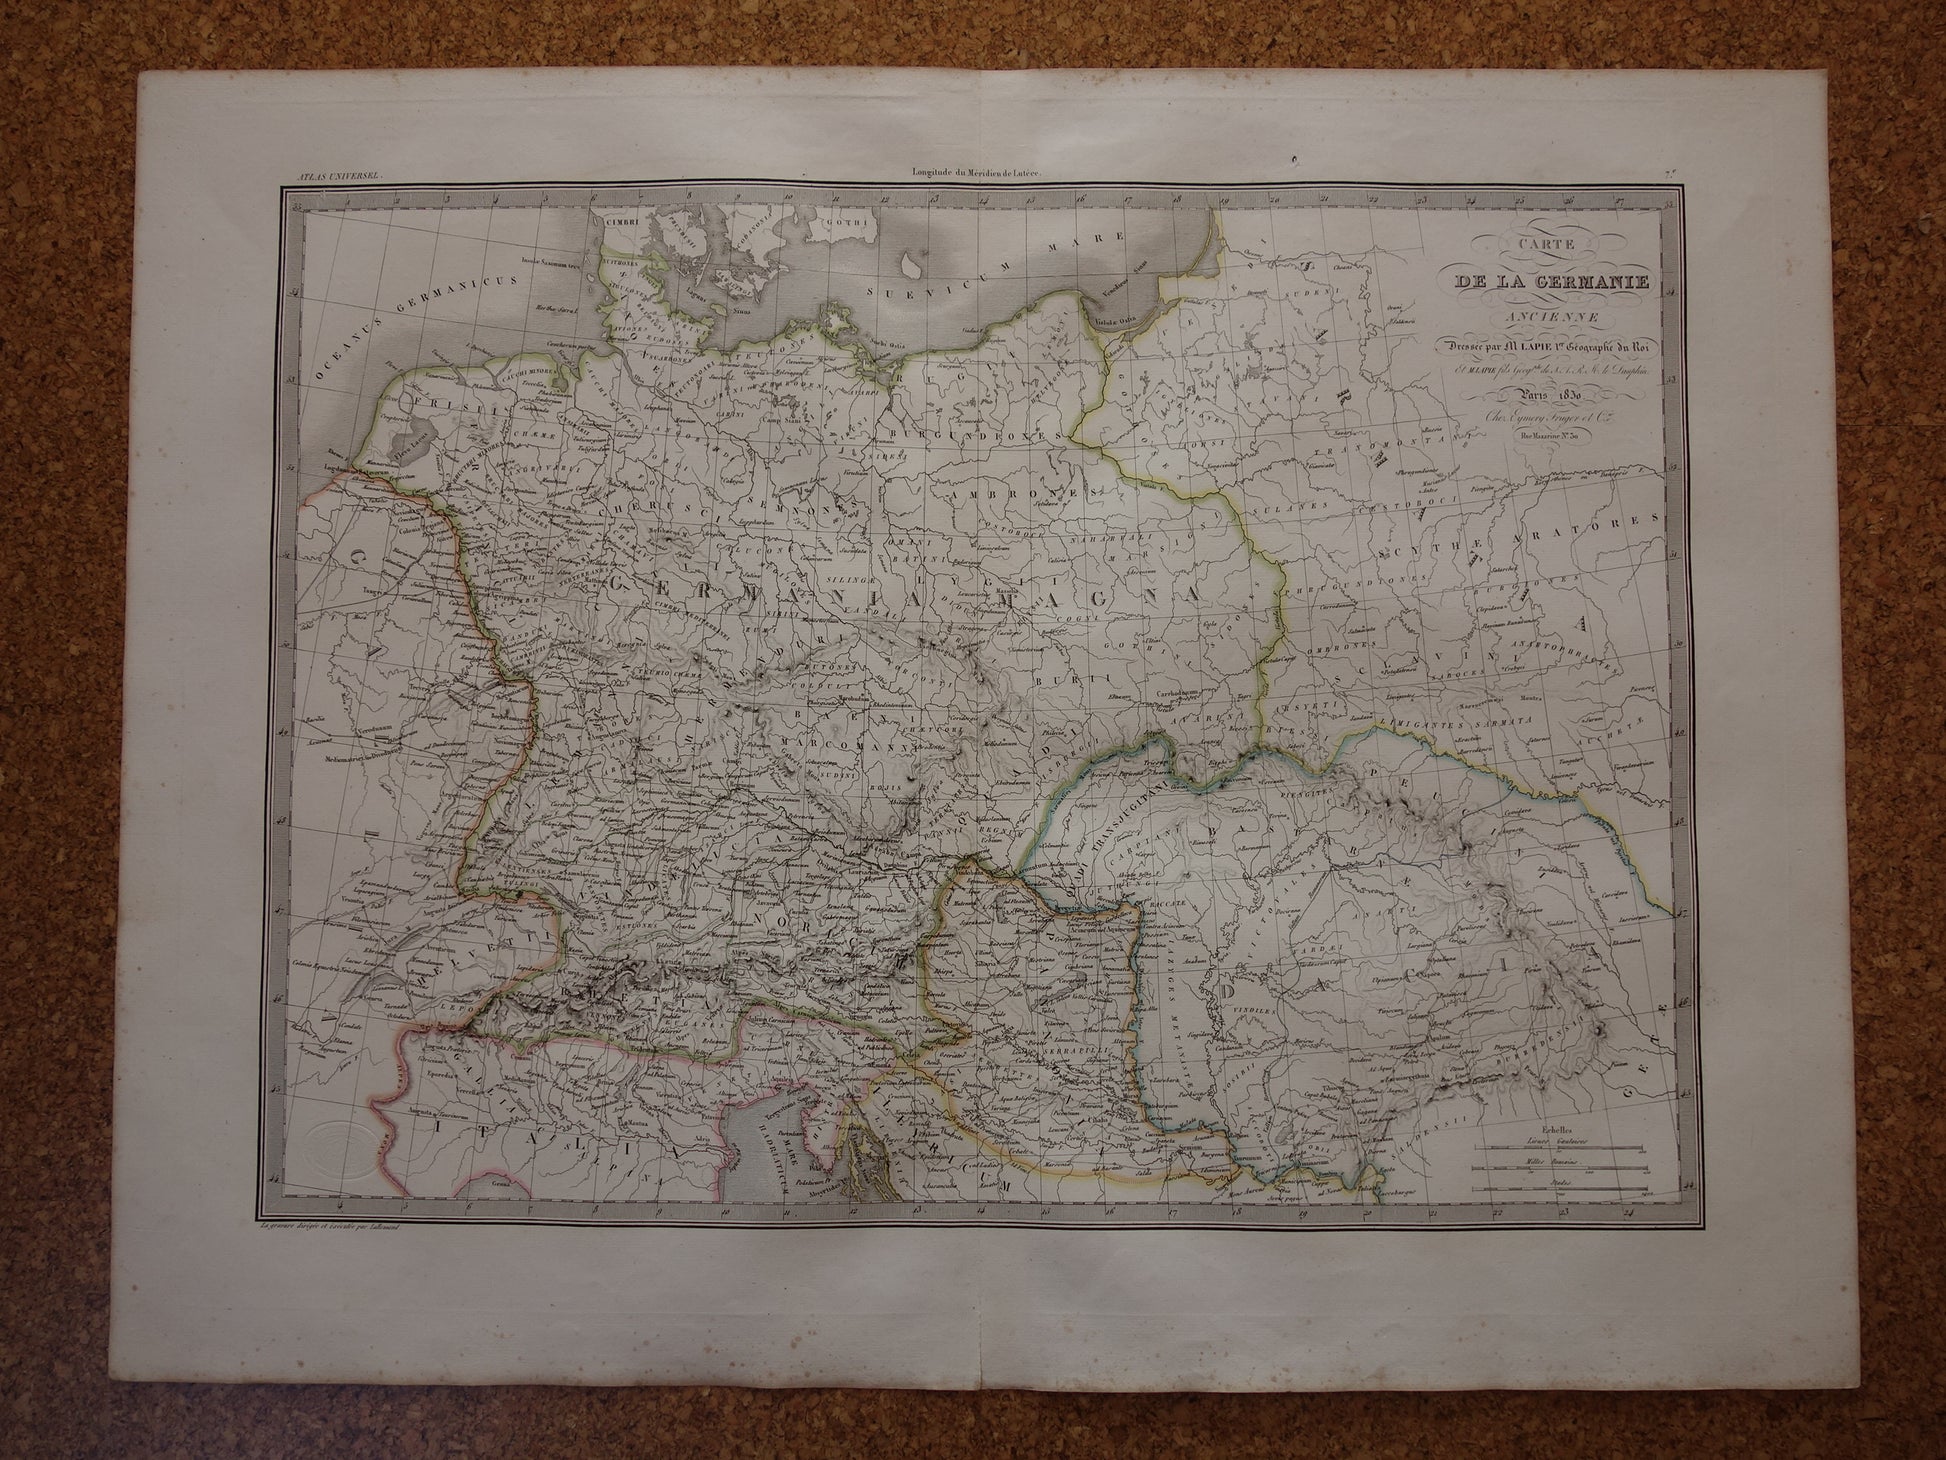 Germanië oude historische landkaart van Duitsland en centraal Europa in klassieke oudheid 1830 originele antieke kaart Dacia Germanica Magna